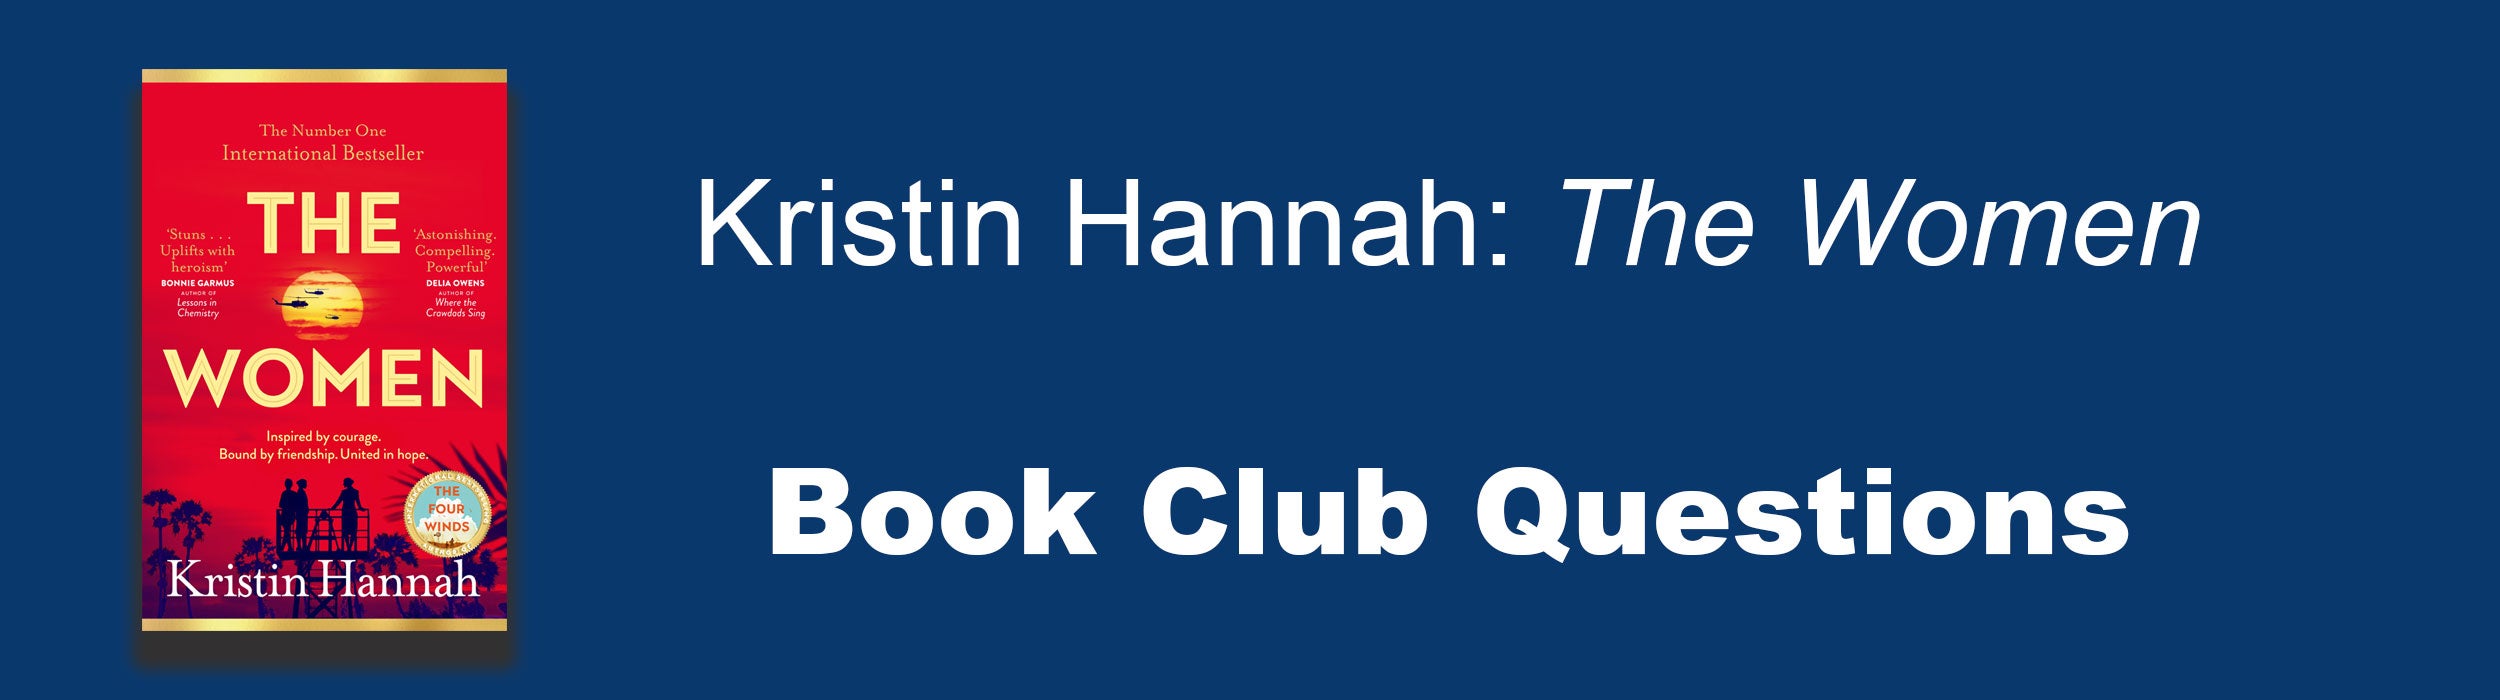 The-Women-book-club-questions.jpg